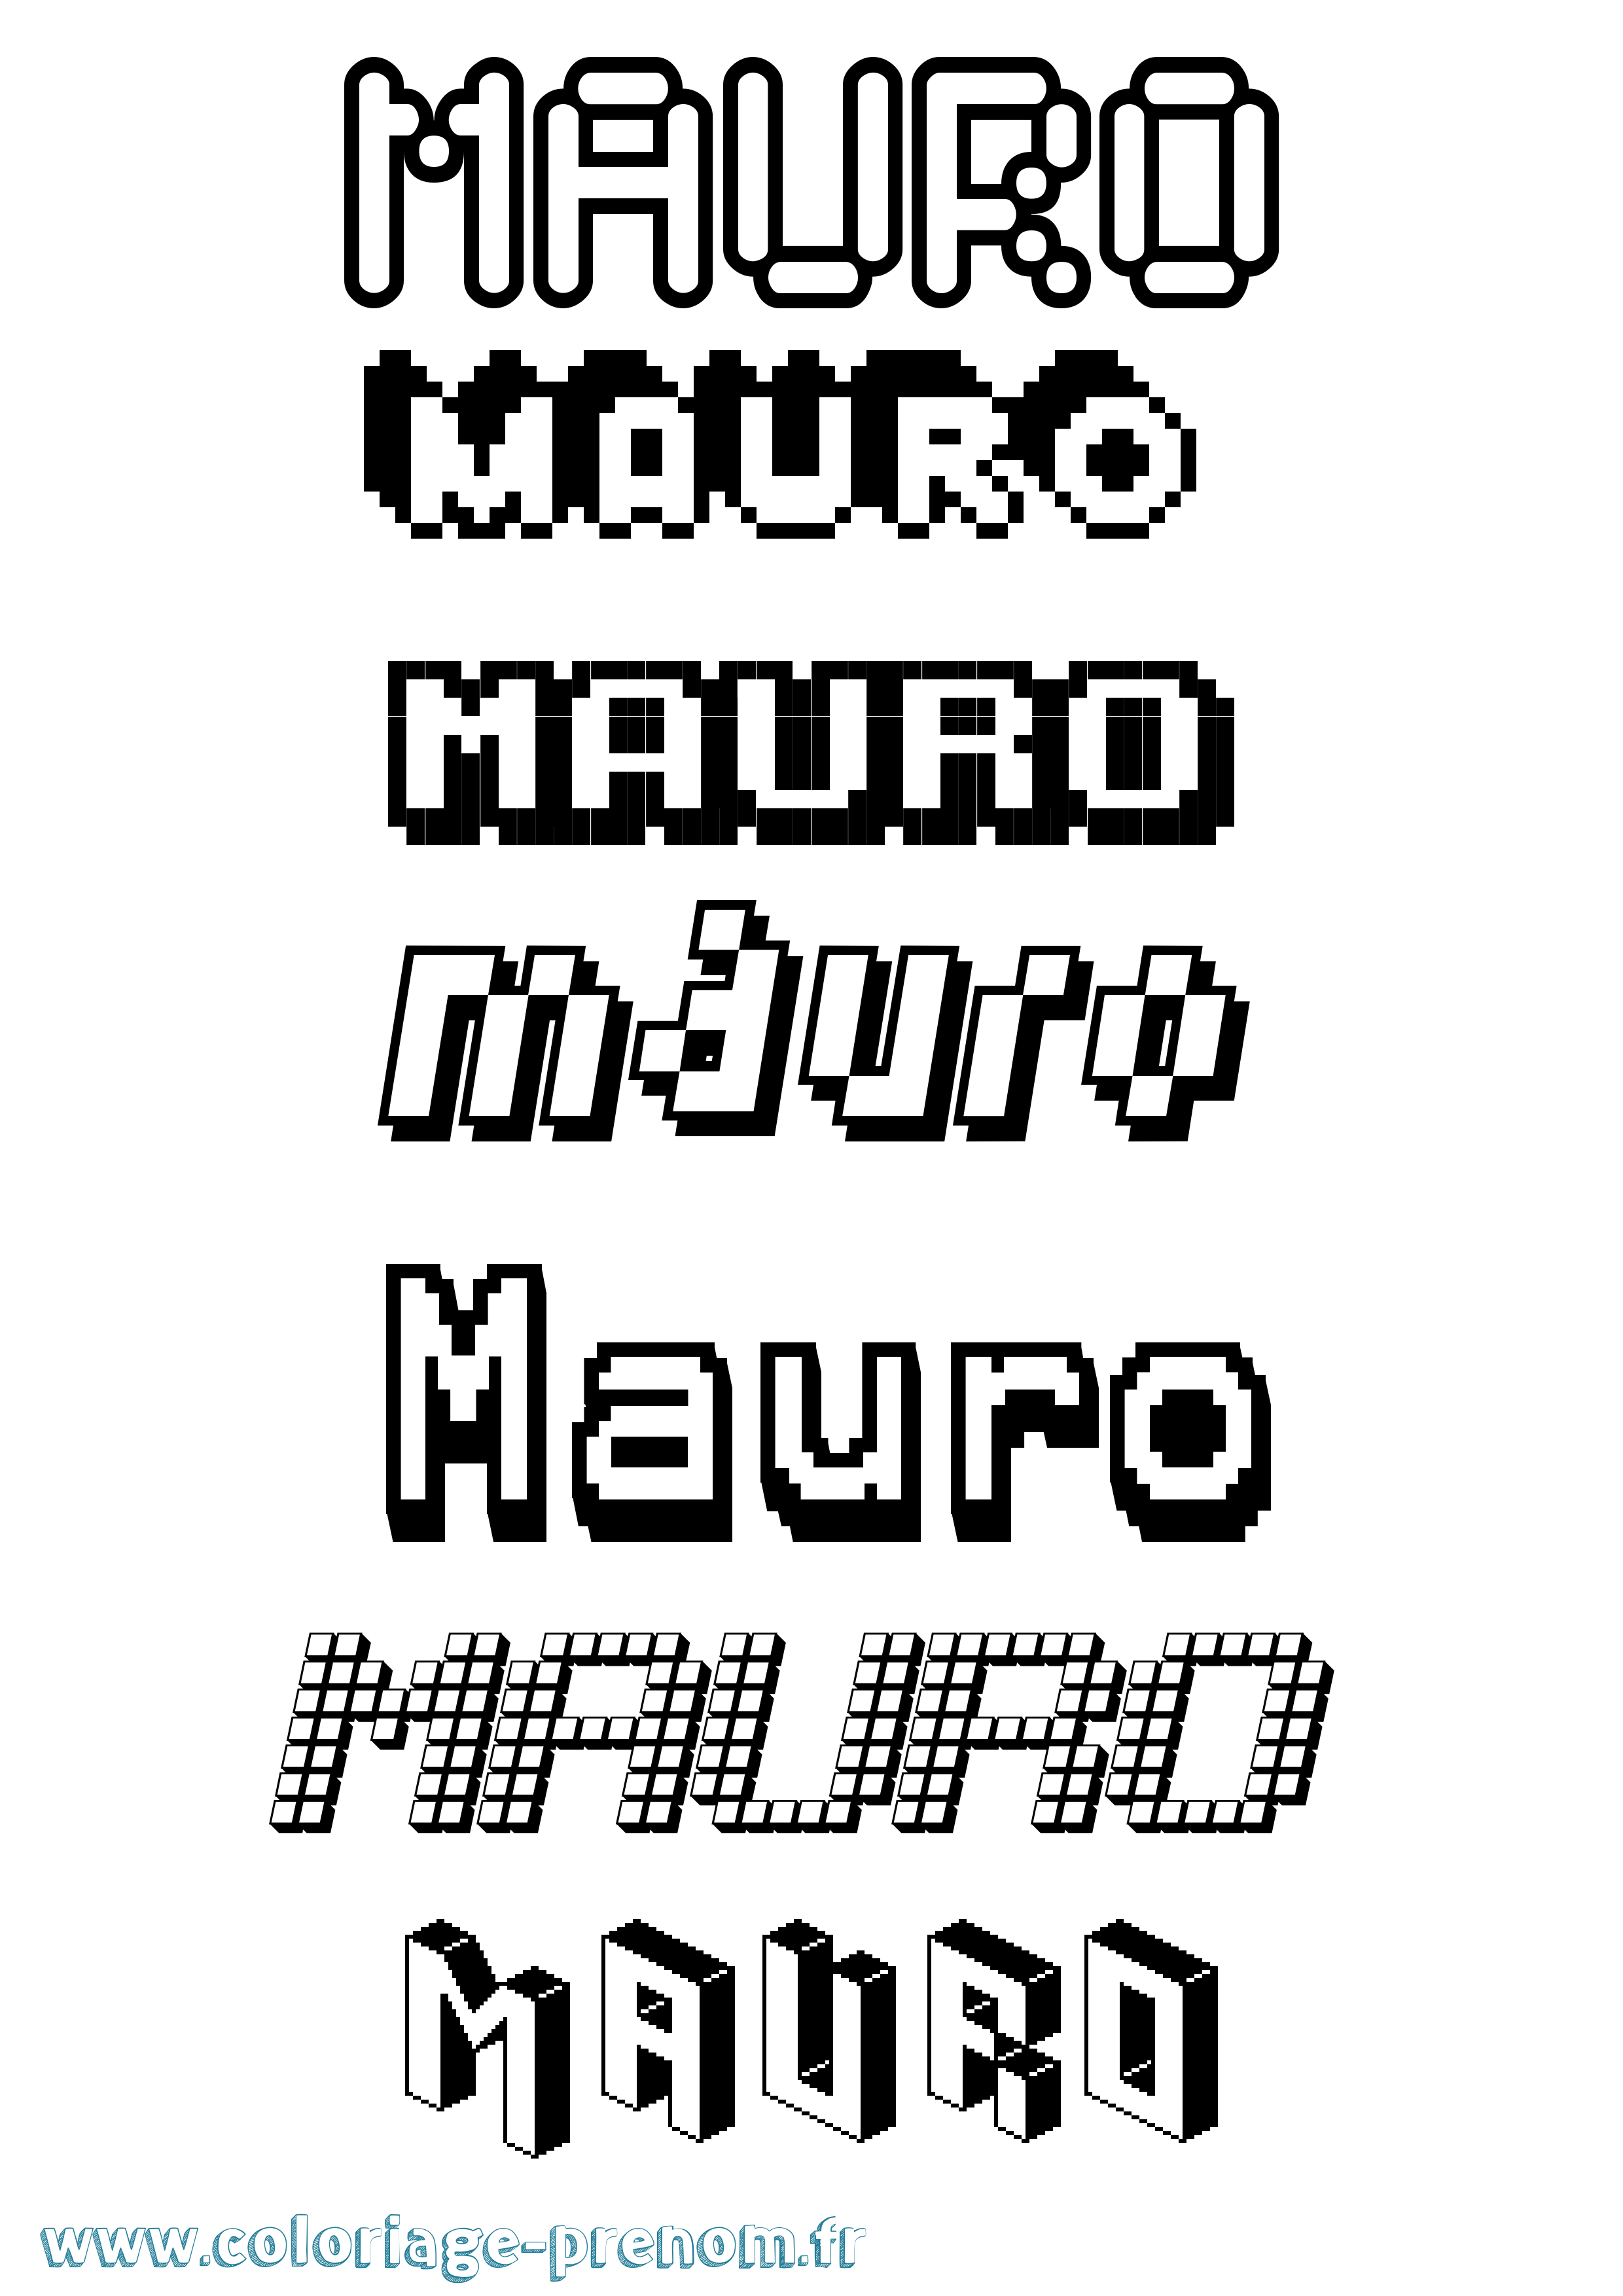 Coloriage prénom Mauro Pixel